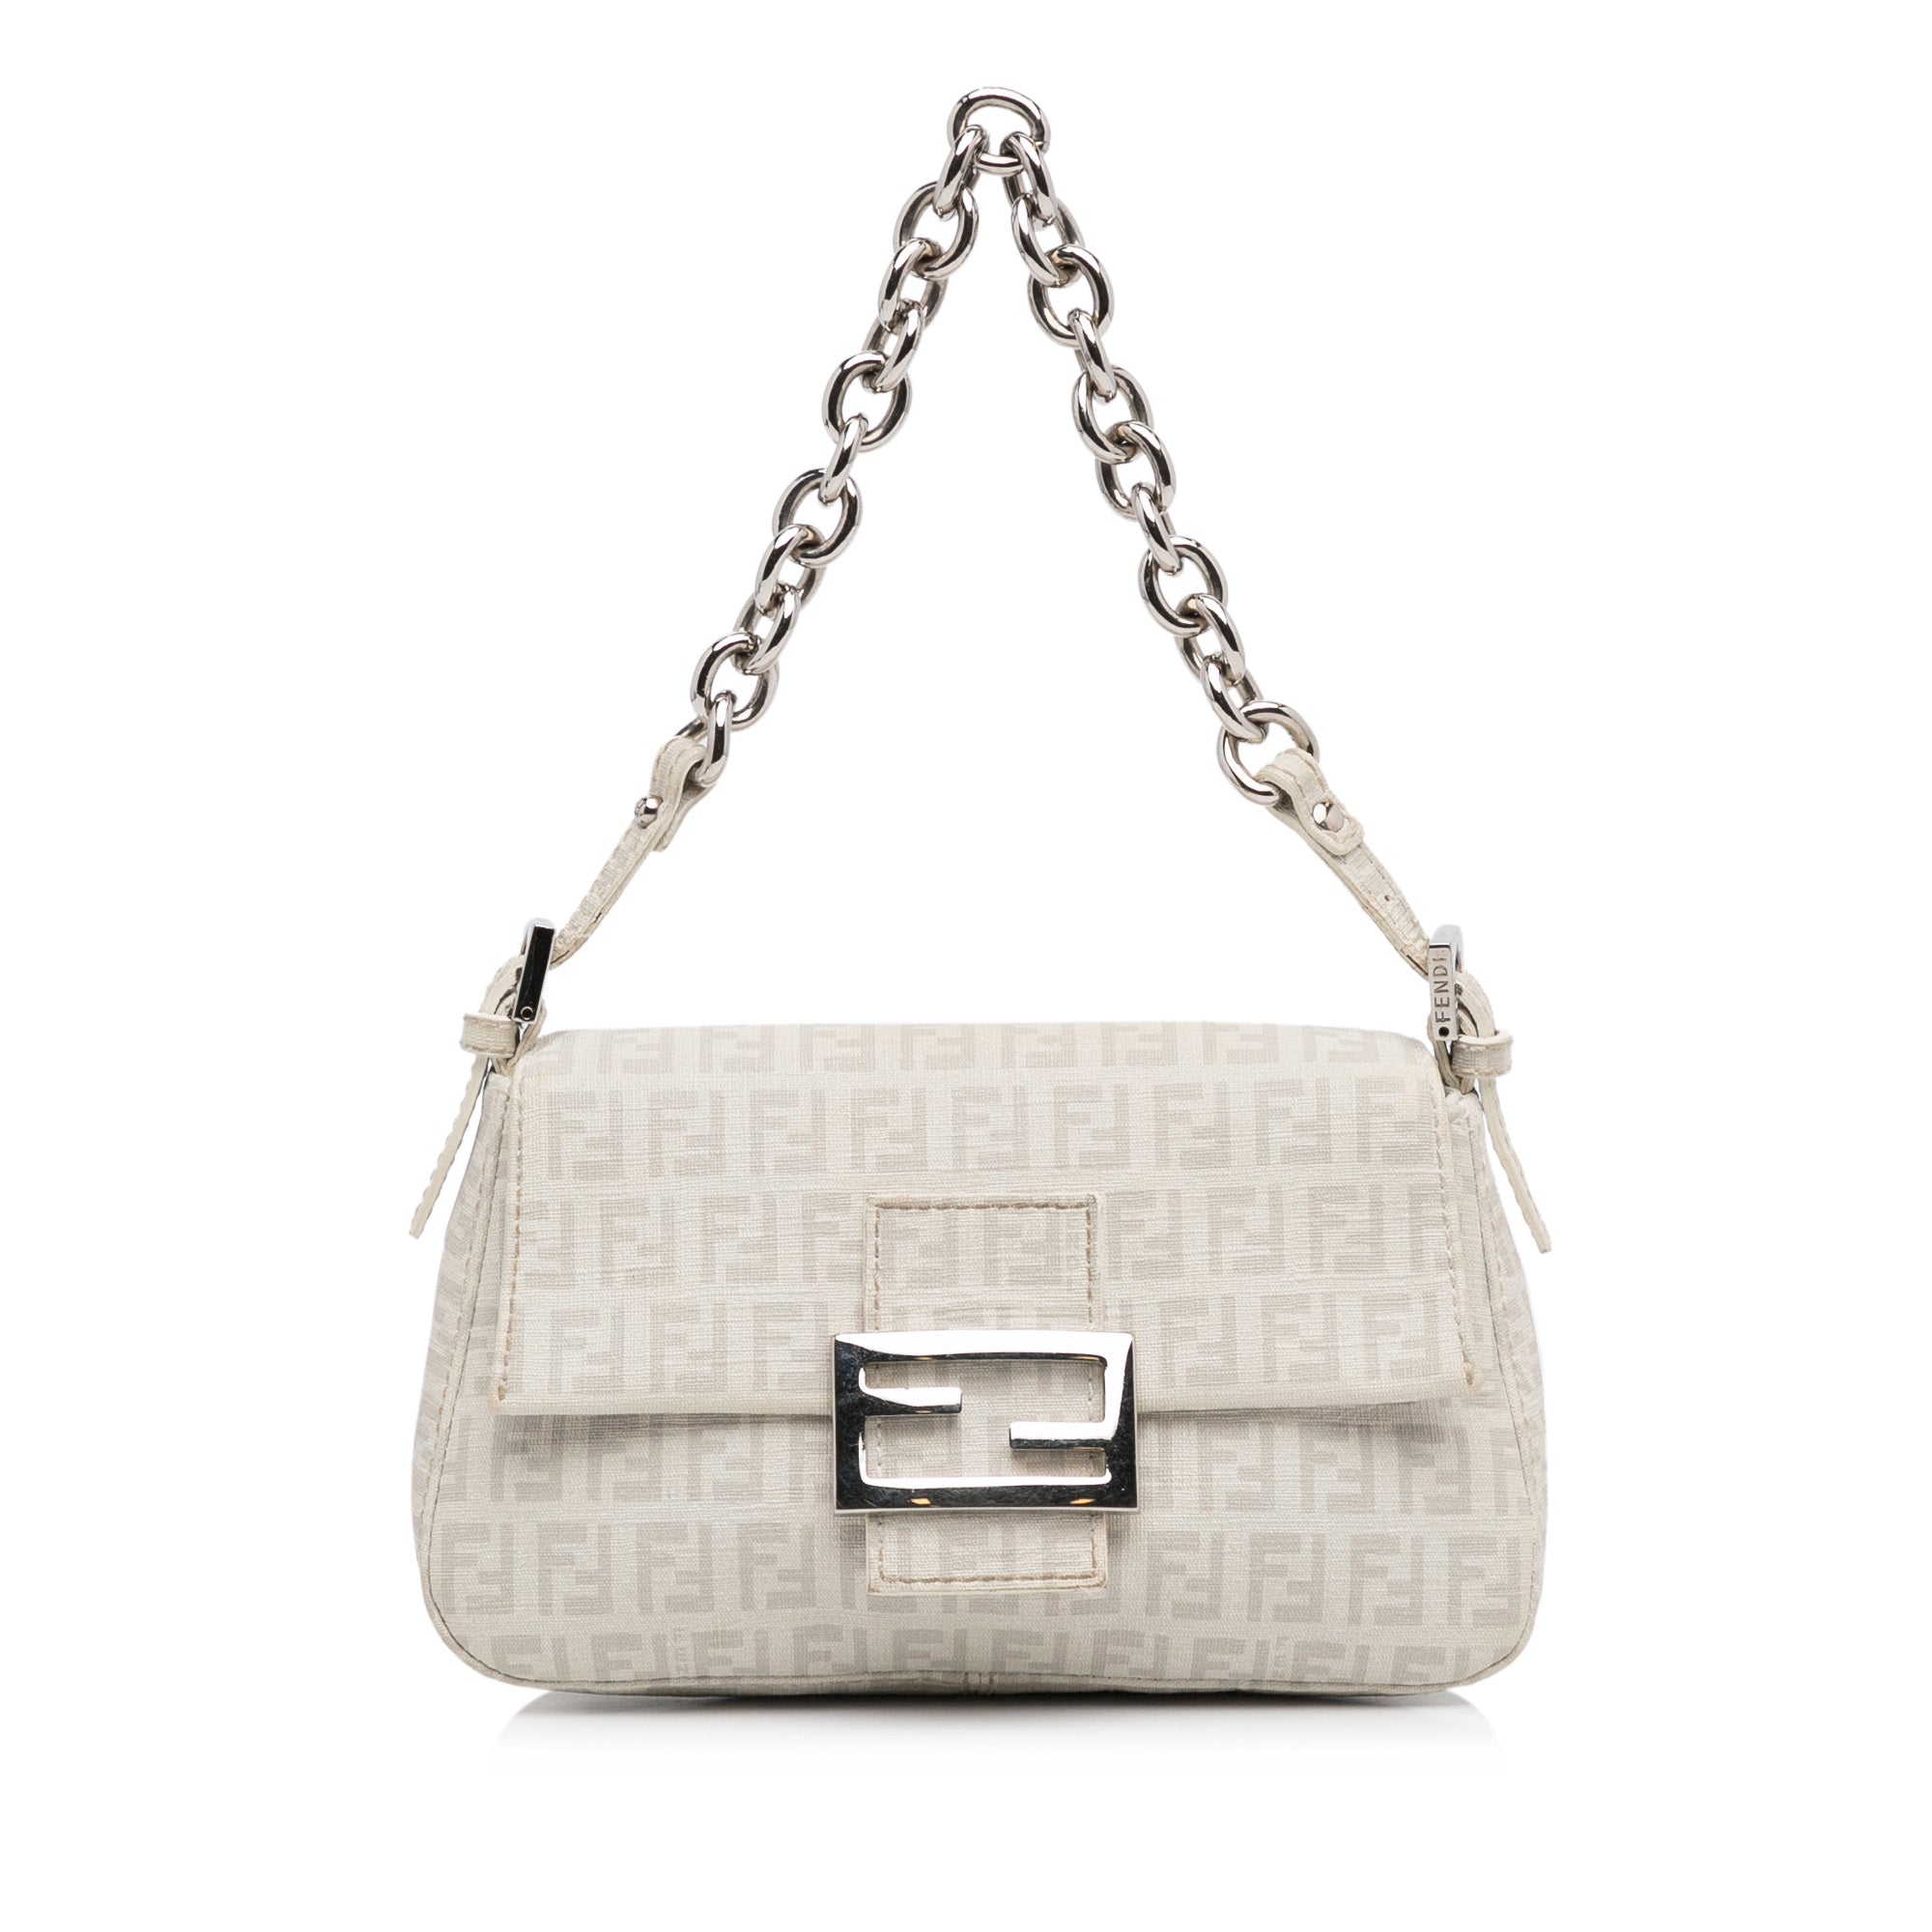 Louis Vuitton, Bags, Louis Vuitton Otg Mm Tote Bought It For 270